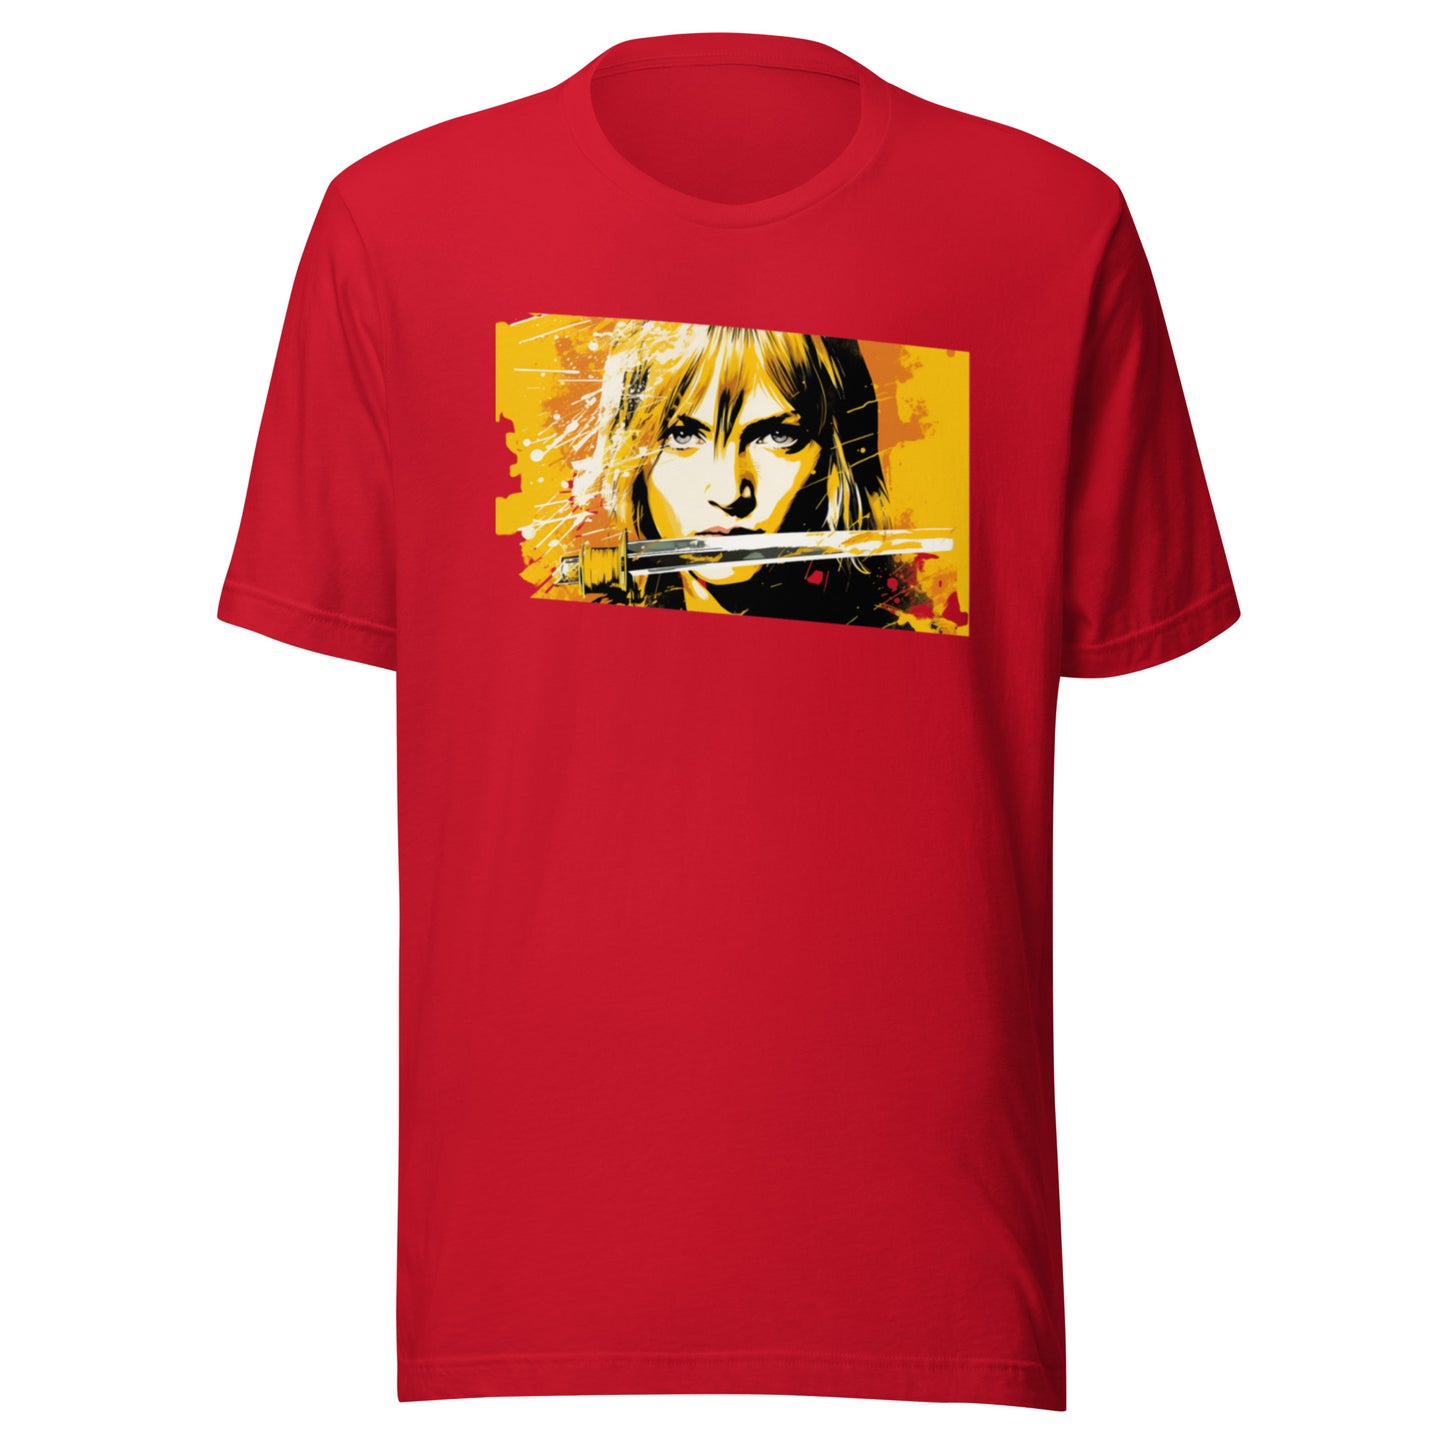 Kill Bill Shirt, Retro Movie Shirt, Graphic Design Kill Bill Tee, Aesthetic Comfy Streetwear Shirt, Short Sleeve Summer Shirt